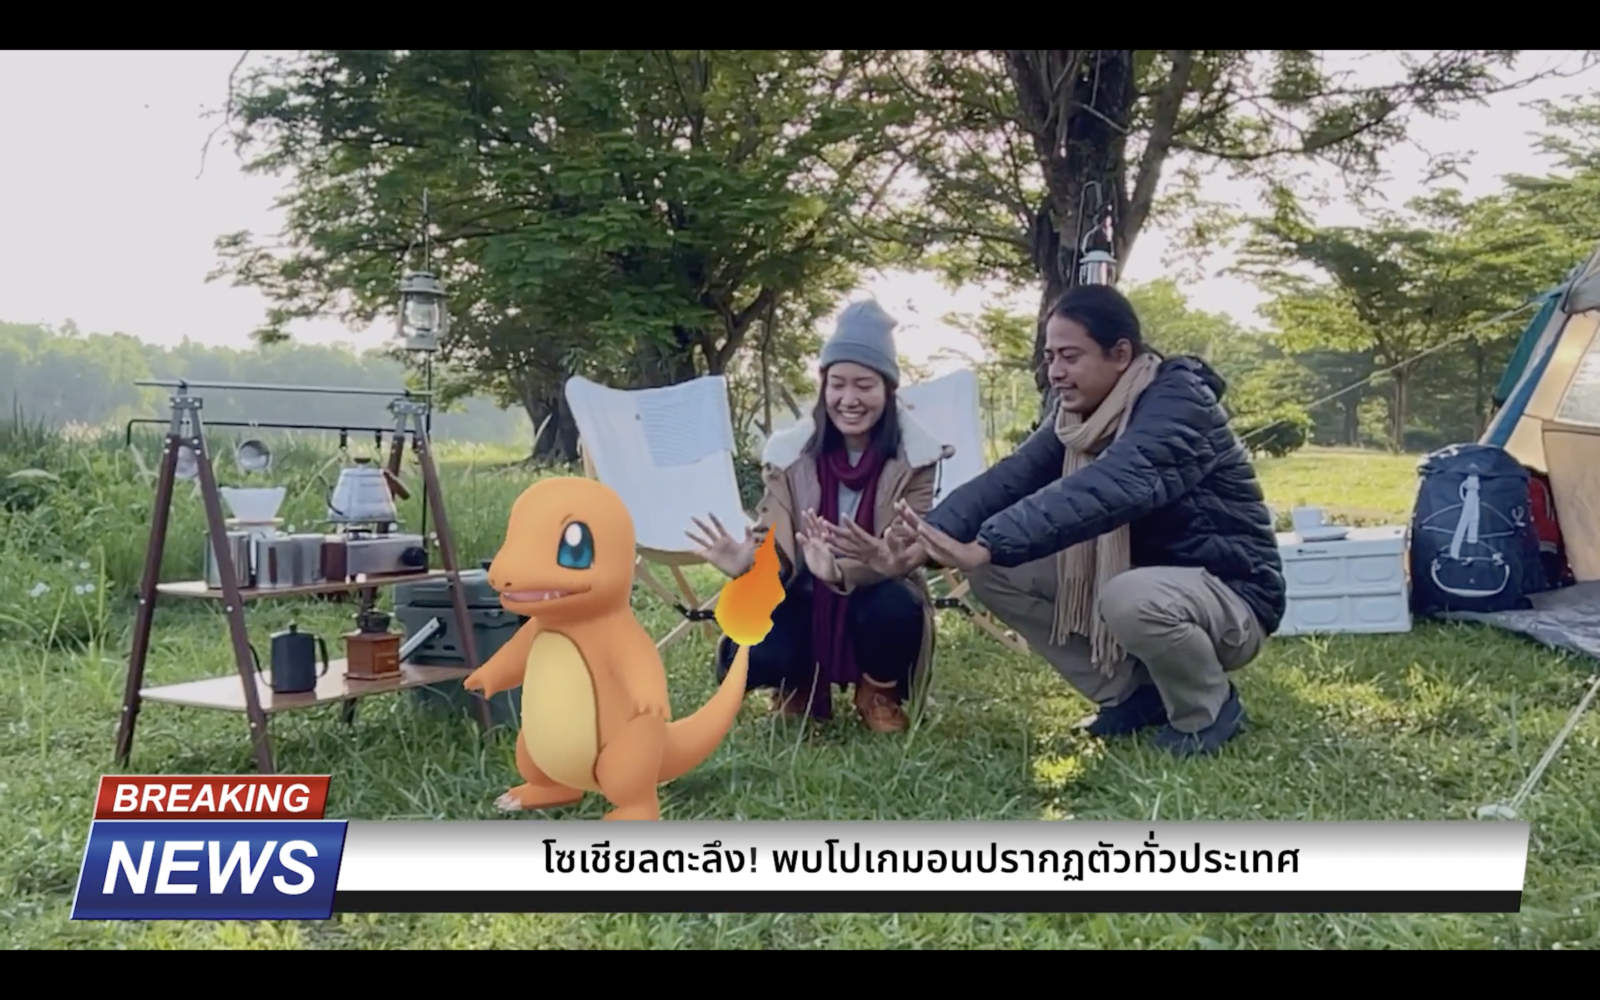 S2 1 2022 09 21 15.06.50 | Pokémon Go | แคมเปญสุดเอ็กซ์คลูซีฟจาก Pokémon GO และไอซ์ พาริส เริ่มต้นแล้ววันนี้ในประเทศไทย